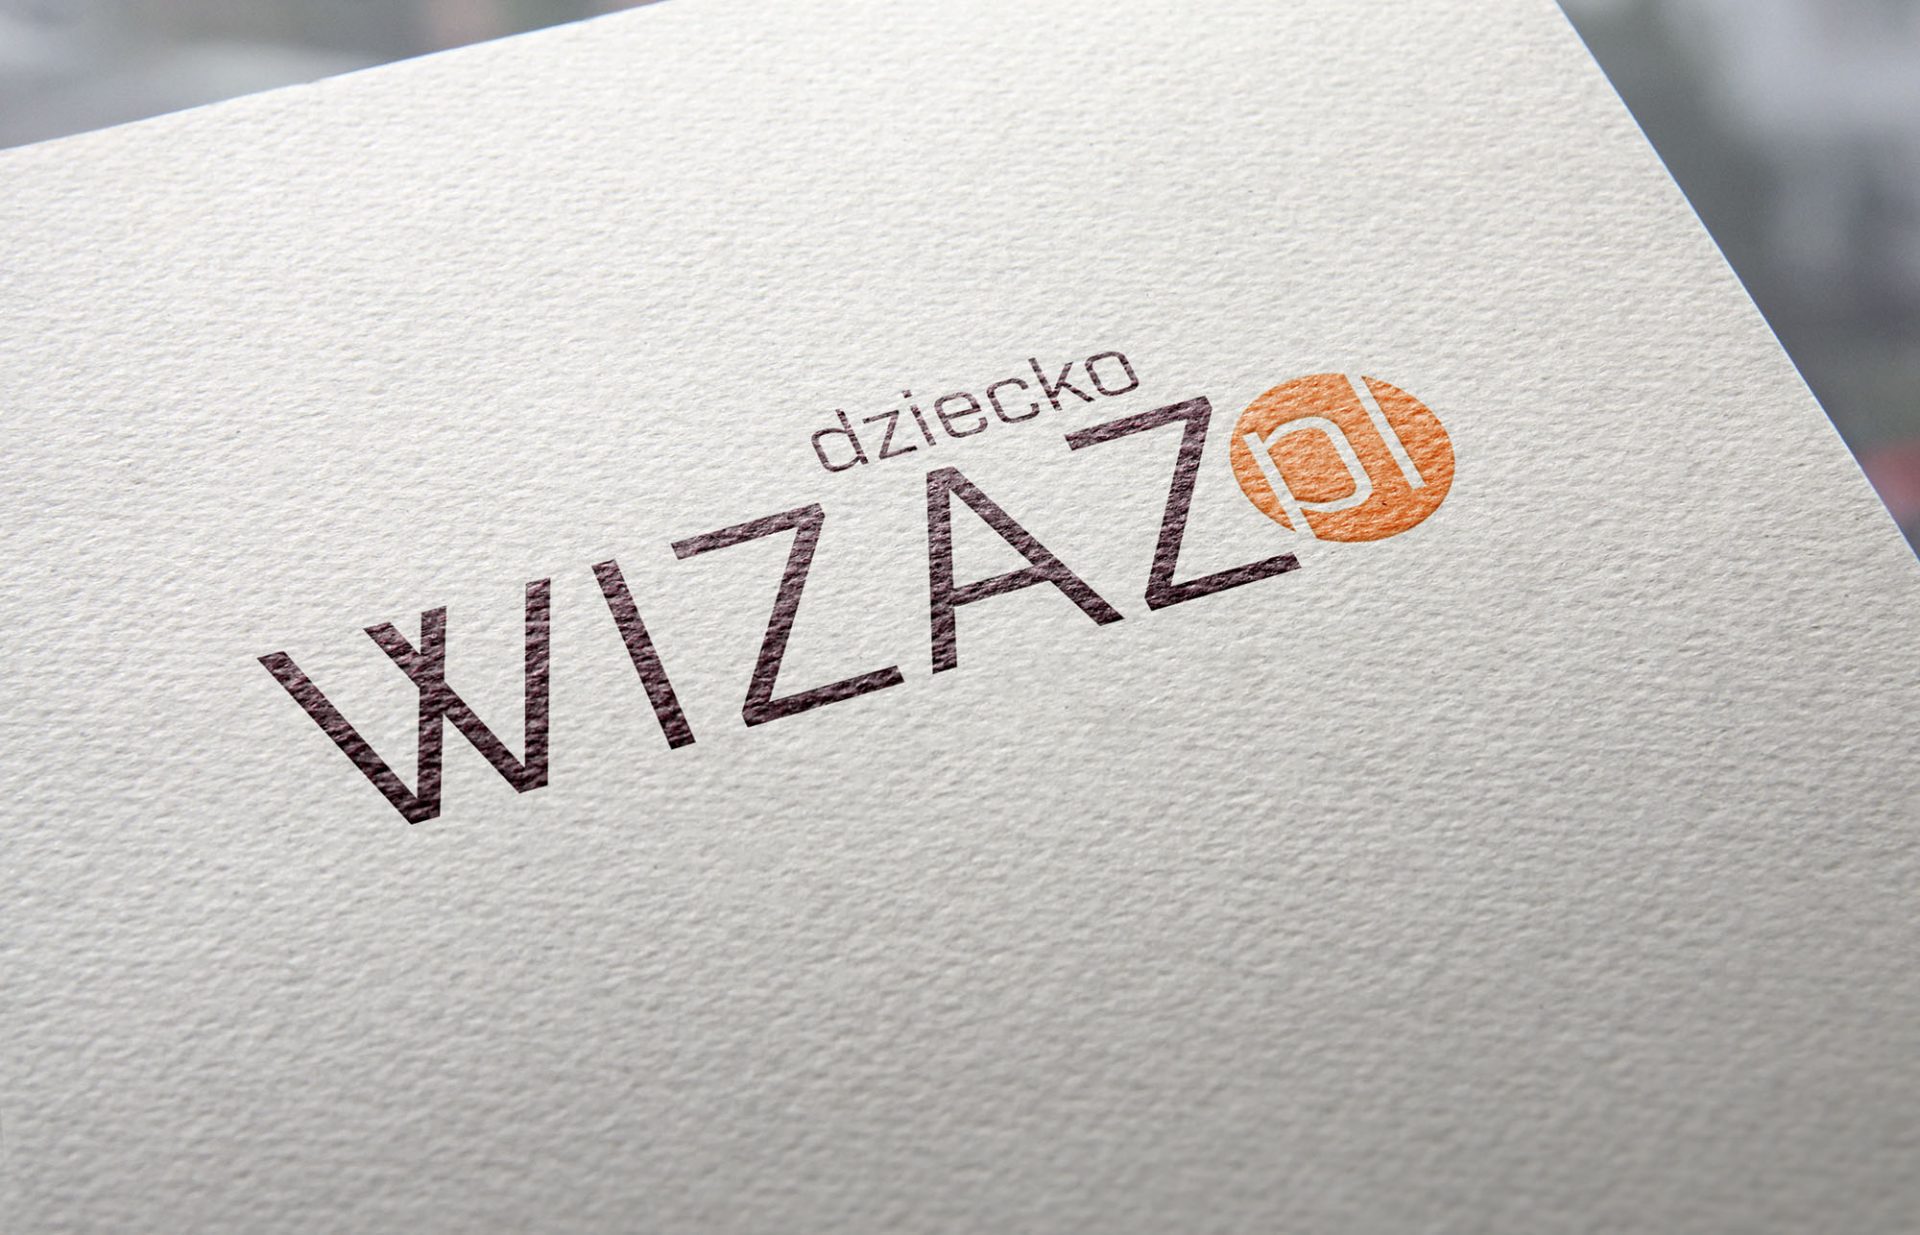 Wizaz.pl